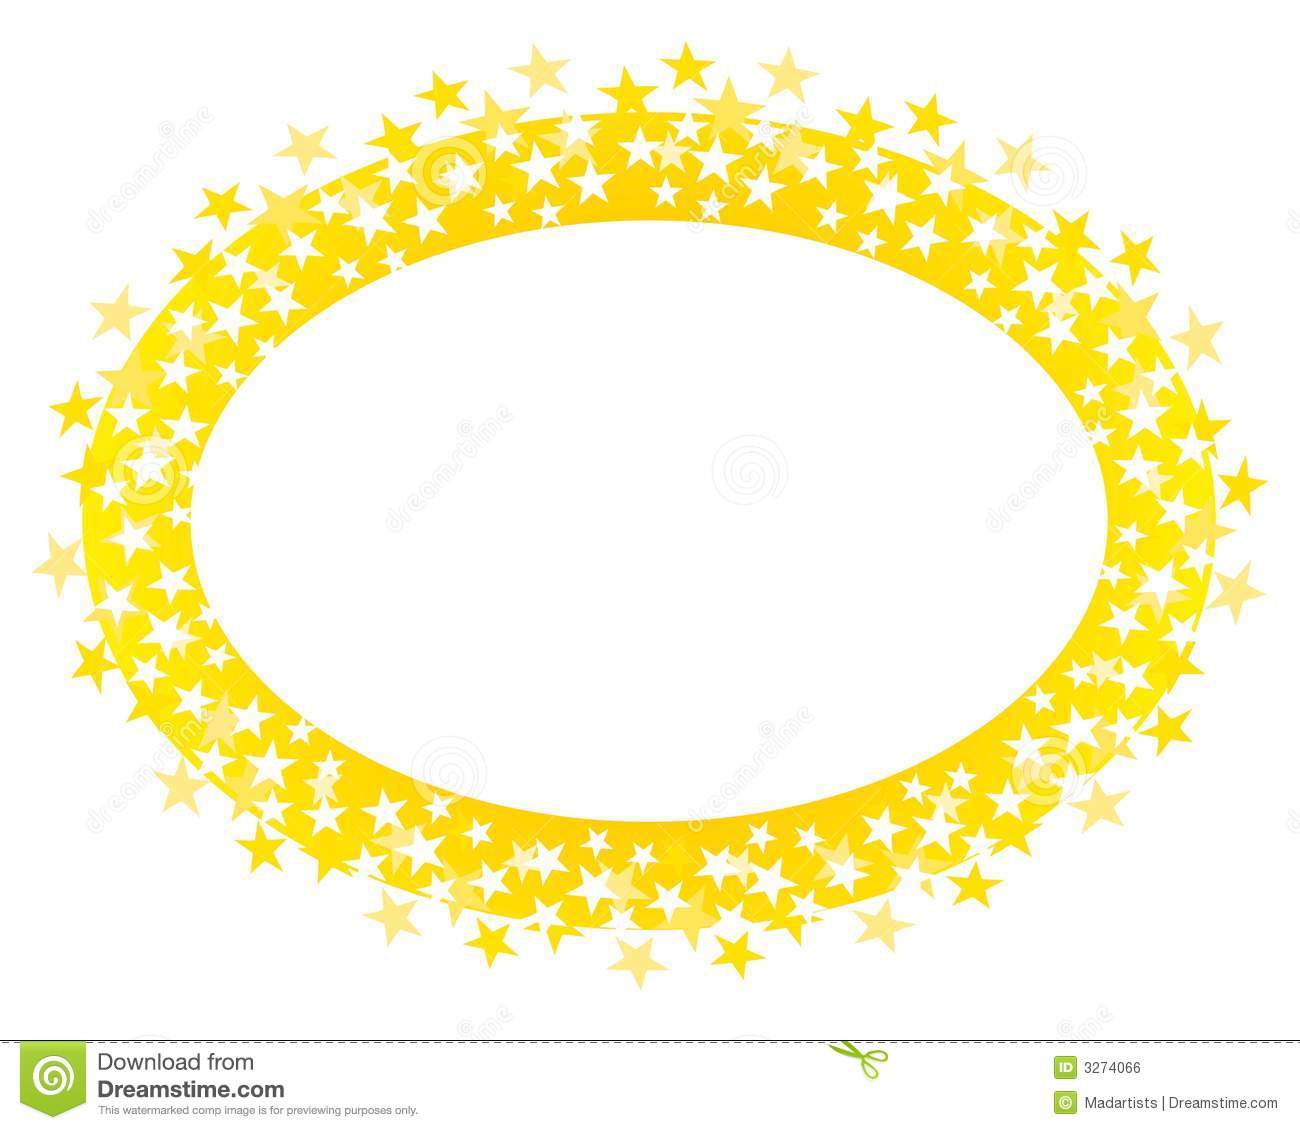 Gold Oval Stars Border Or Logo Royalty Free Stock Image   Image